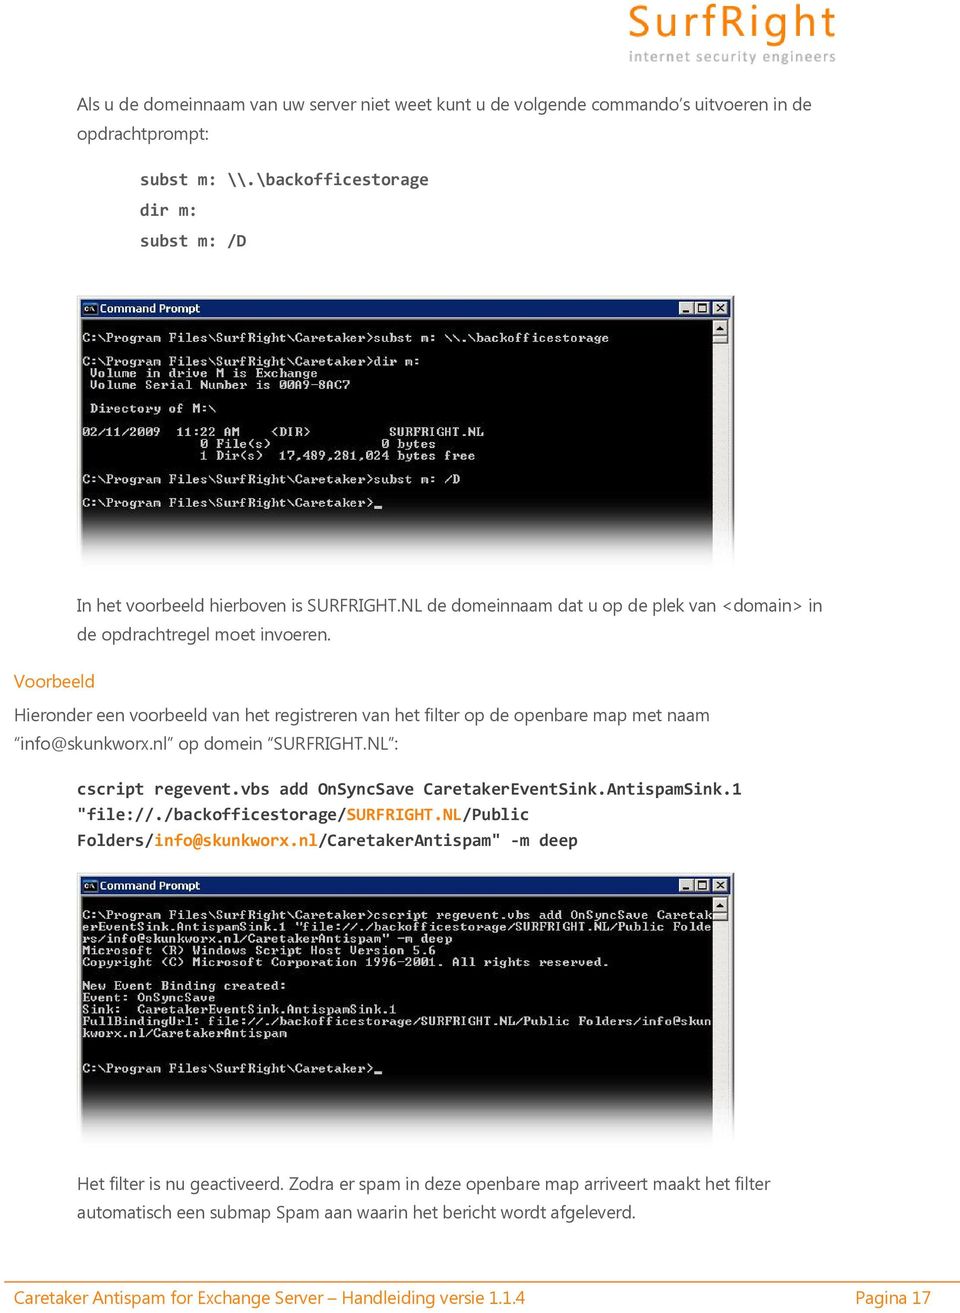 nl op domein SURFRIGHT.NL : cscript regevent.vbs add OnSyncSave CaretakerEventSink.AntispamSink.1 "file://./backofficestorage/surfright.nl/public Folders/info@skunkworx.